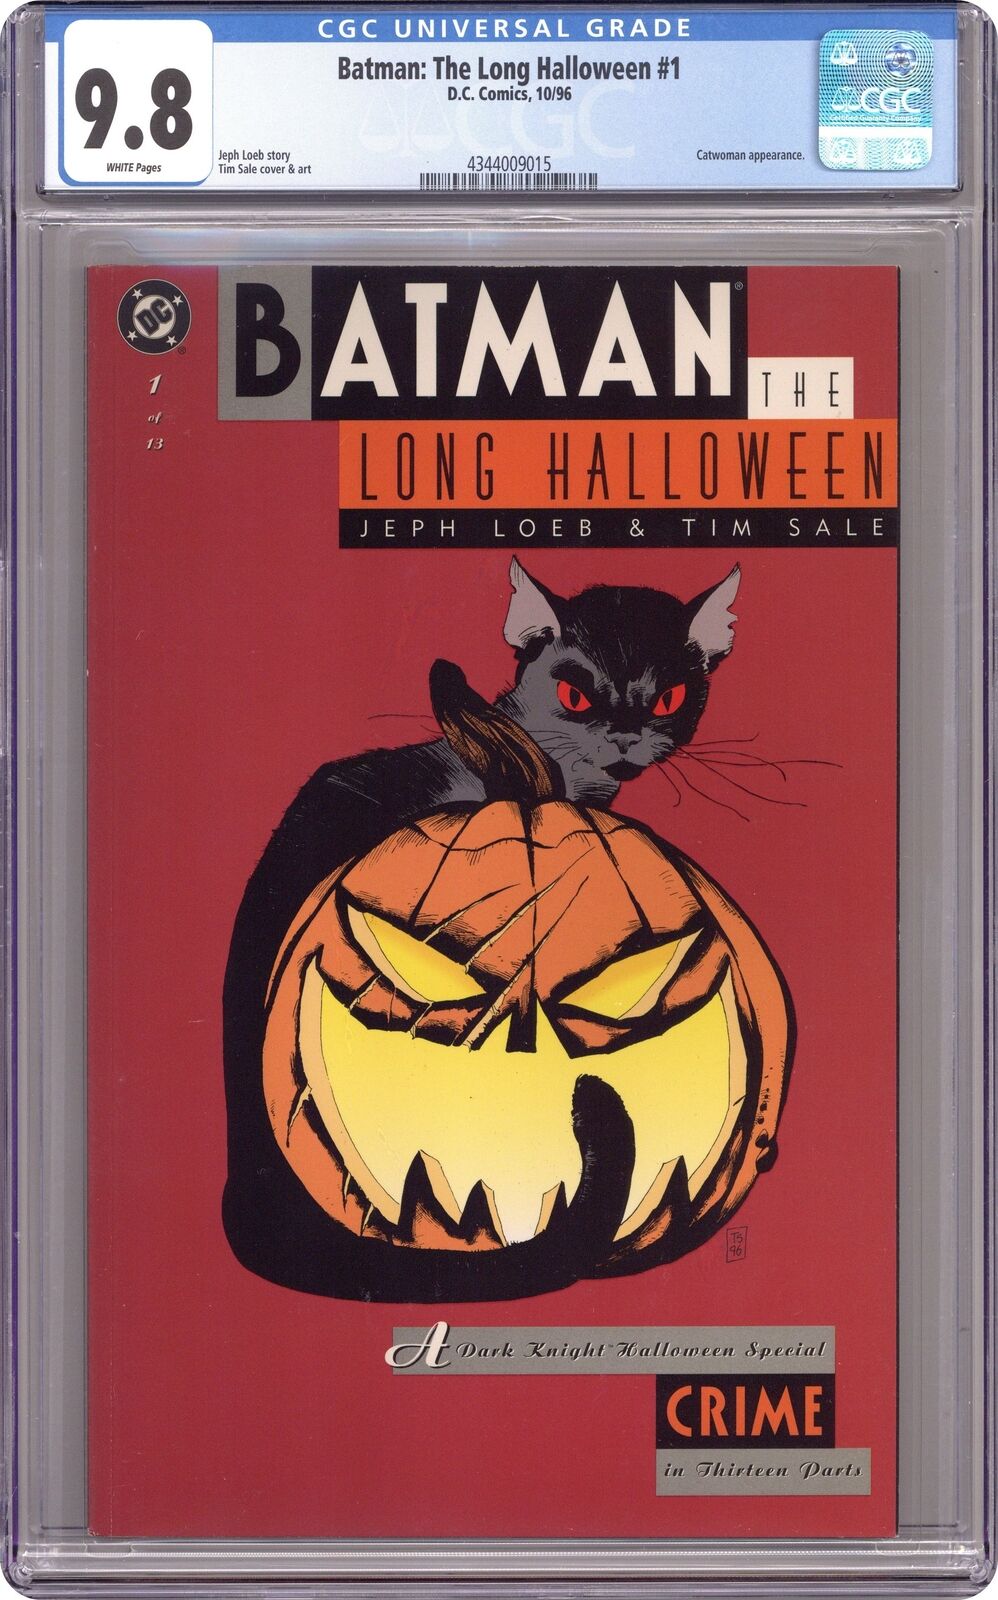 Batman The Long Halloween #1 CGC 9.8 1997 4344009015